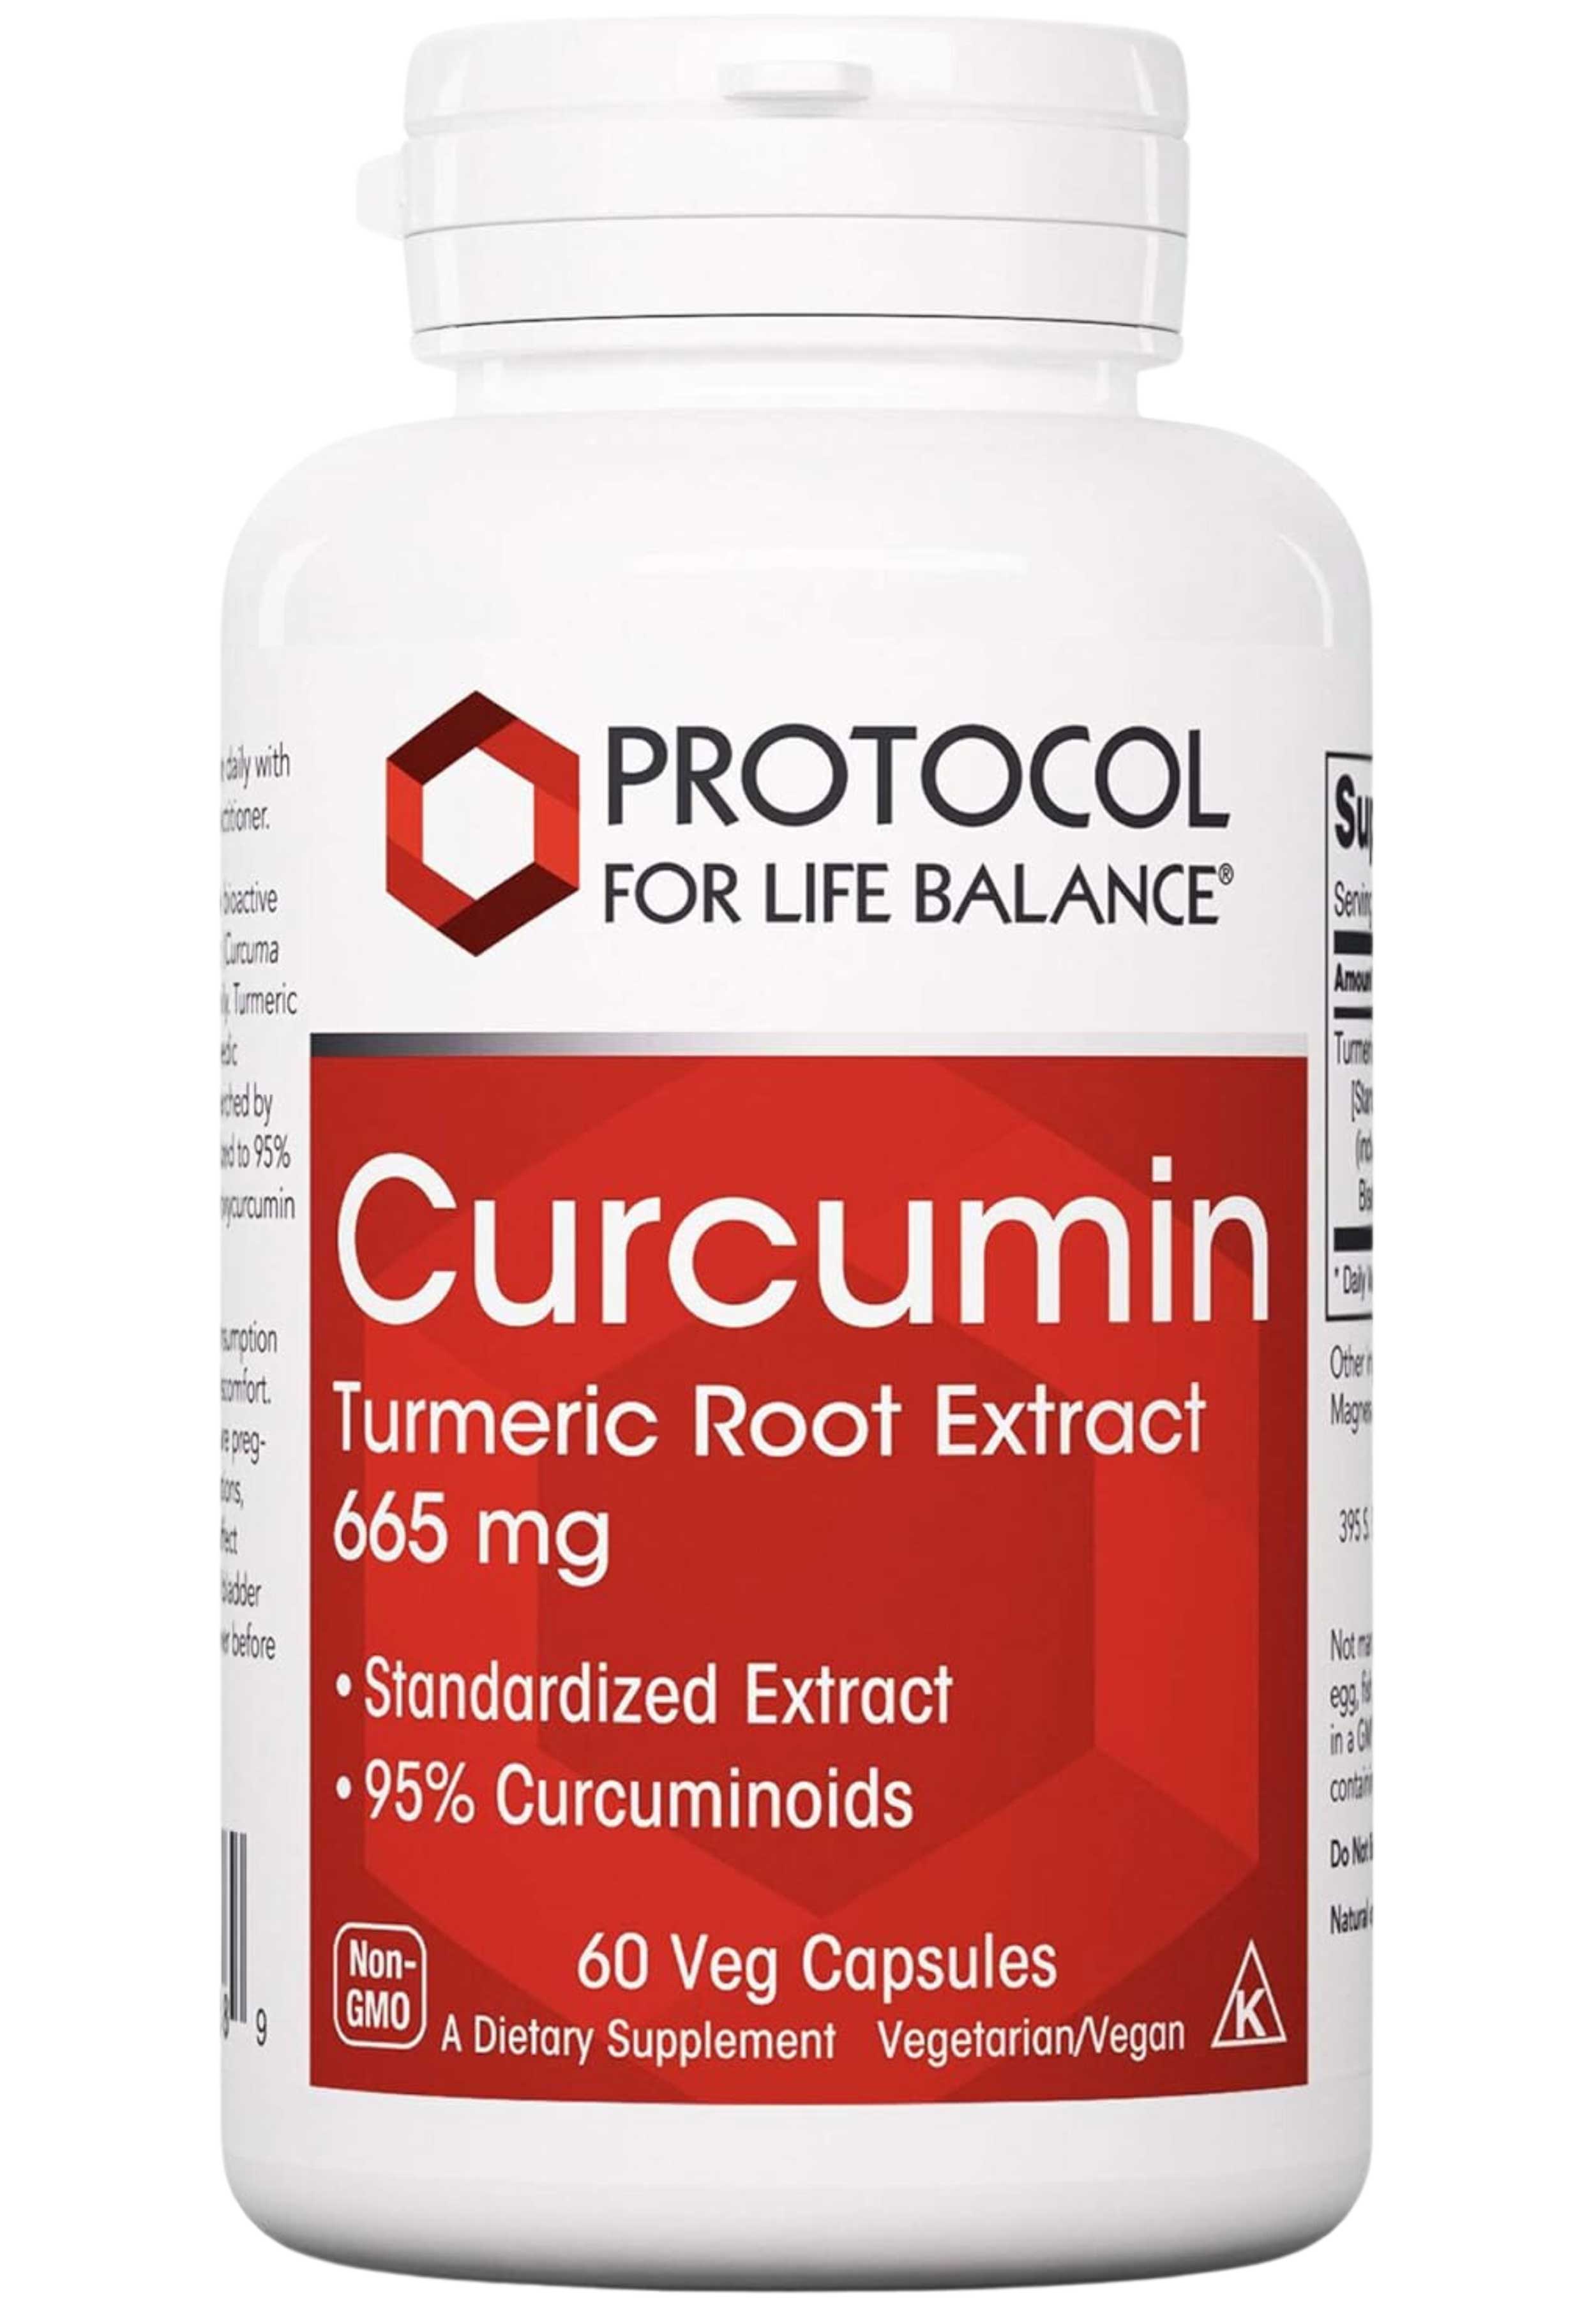 Protocol for Life Balance Curcumin 665 mg